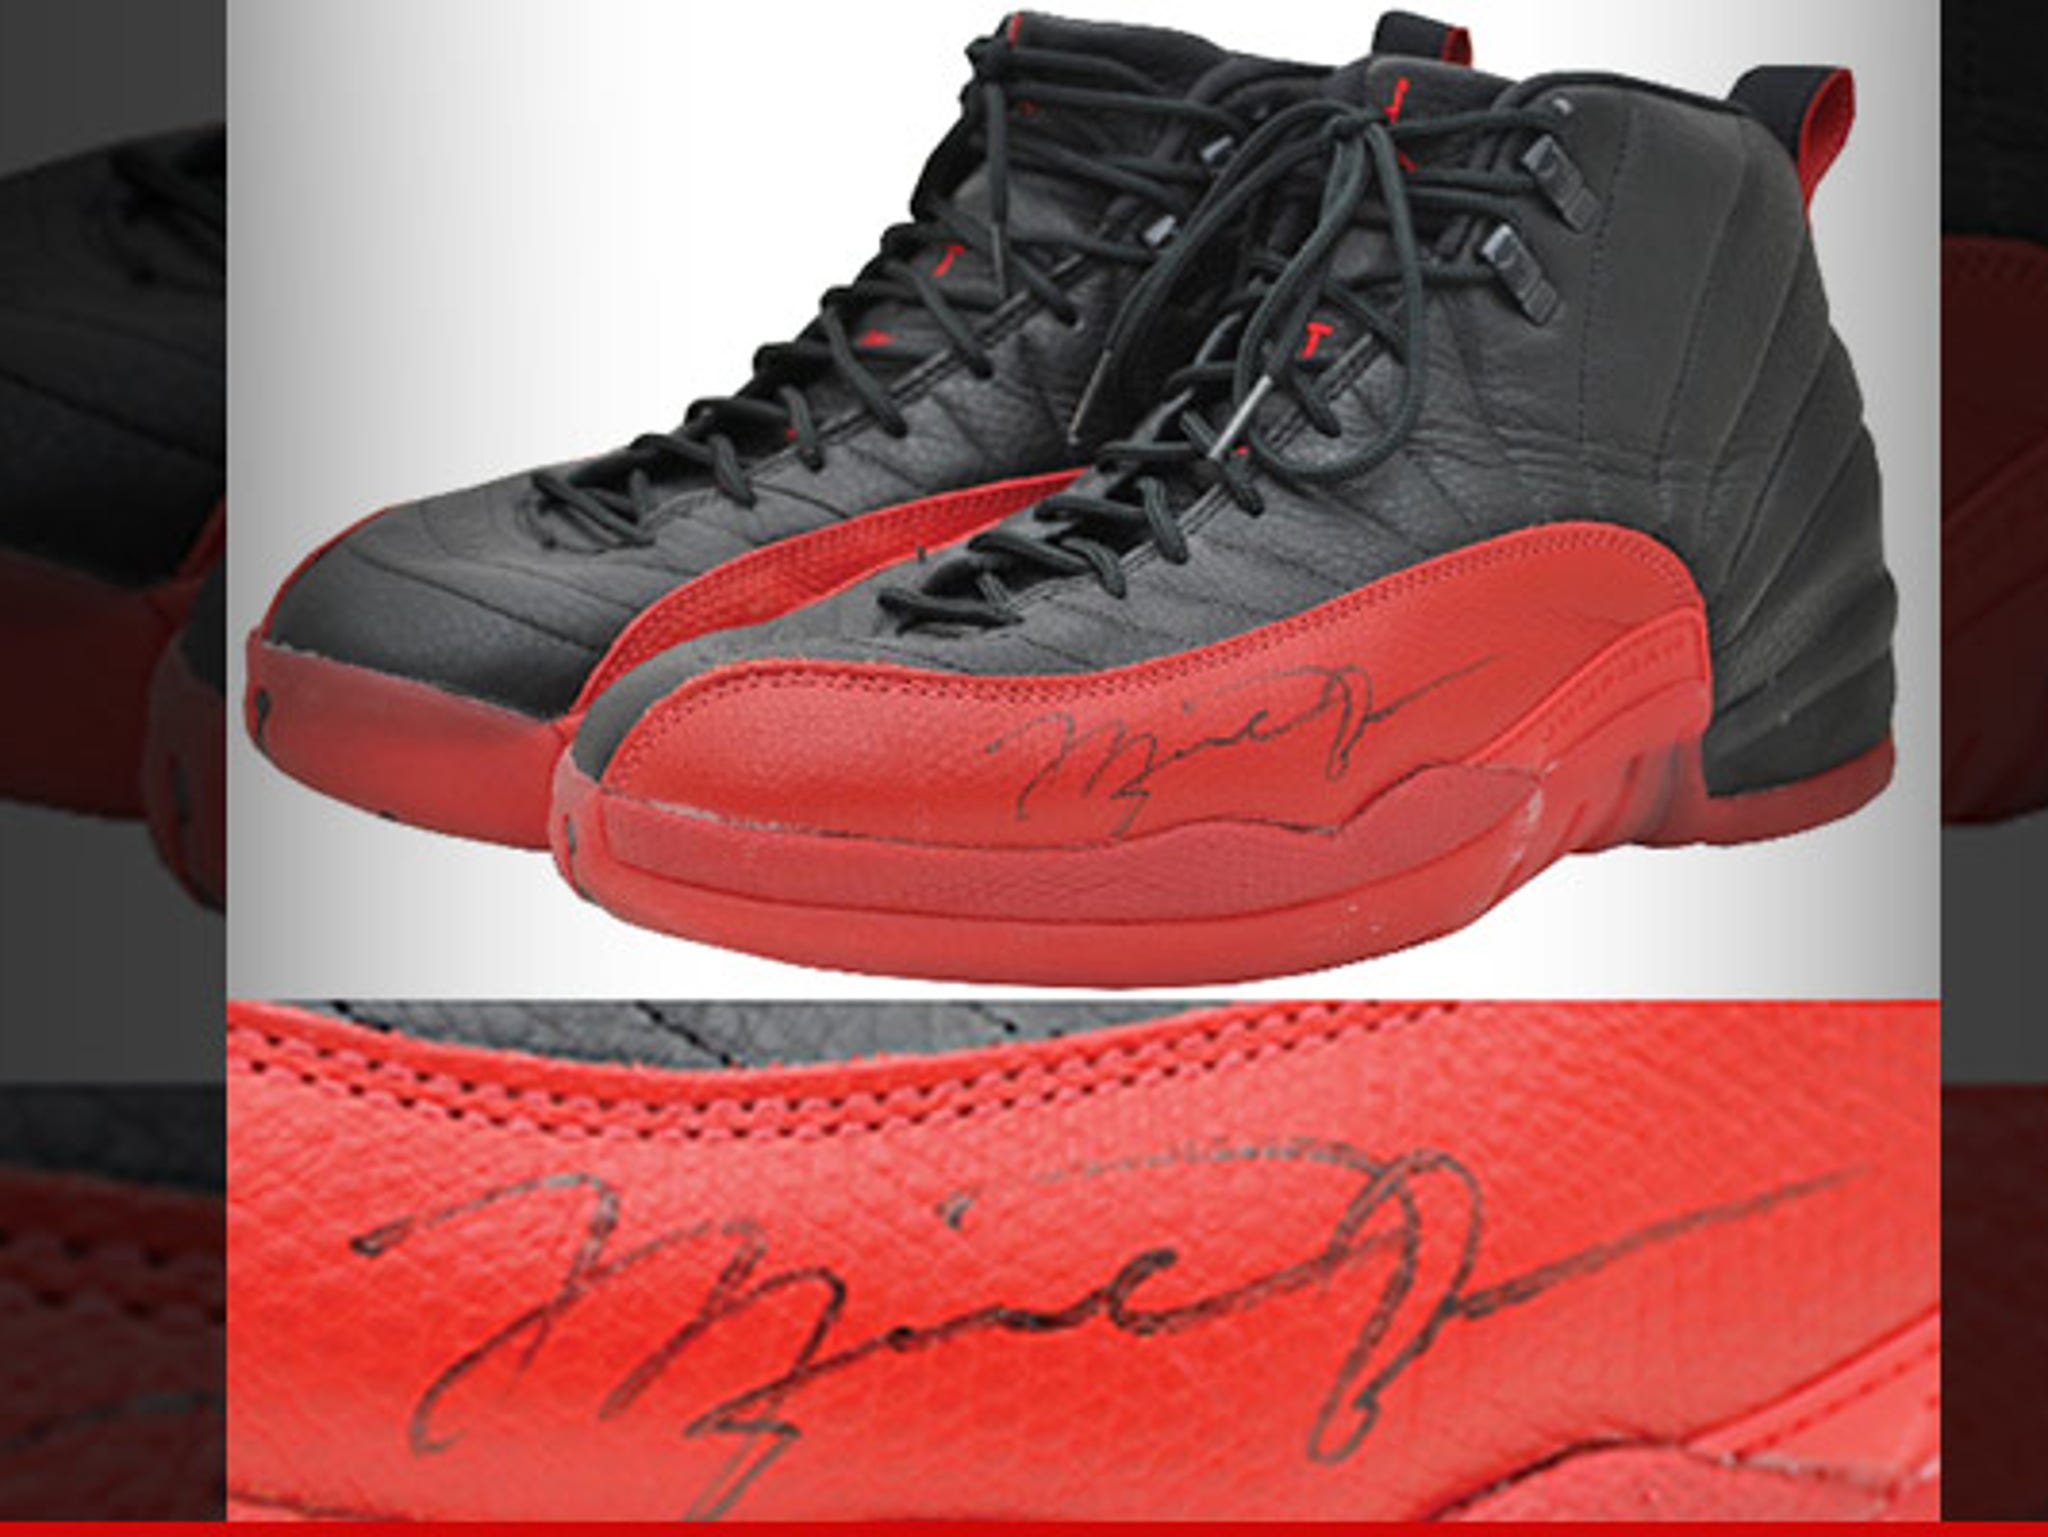 Michael Jordan -- Infamous 'Flu Game' Shoes Sell for $104k